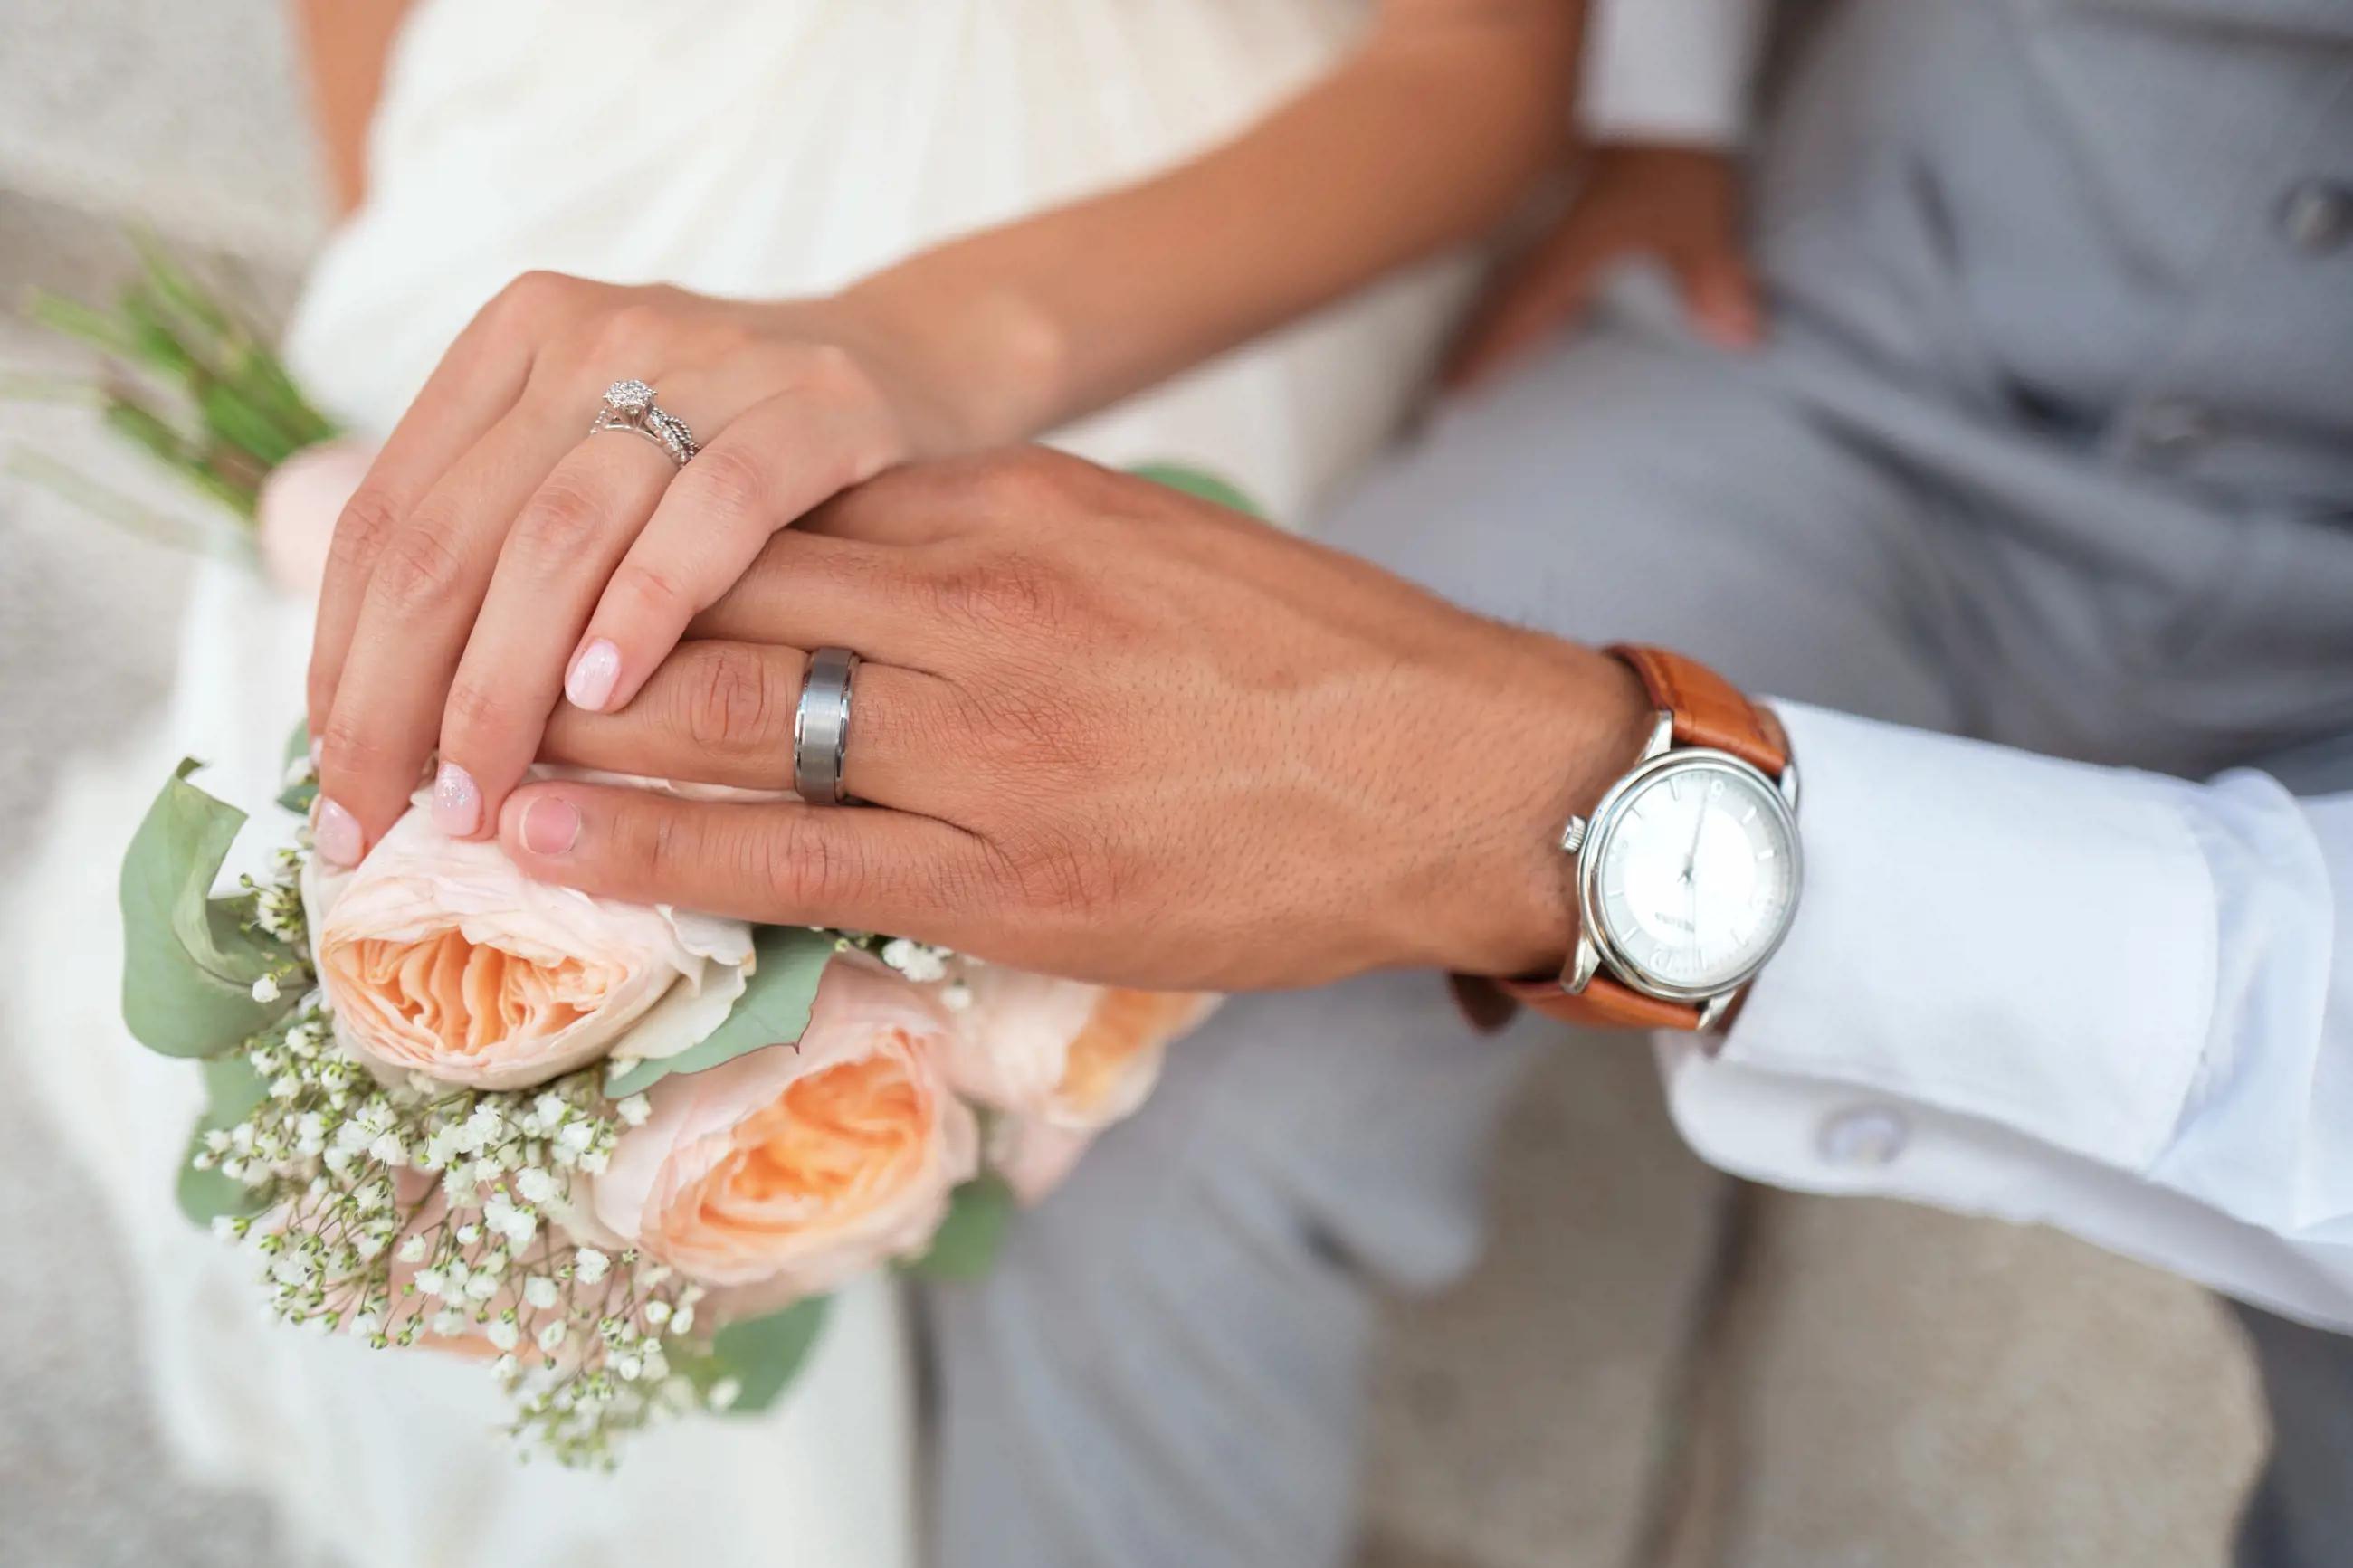 Forget Me Not! 5 Unexpected Wedding Costs. Desktop Image